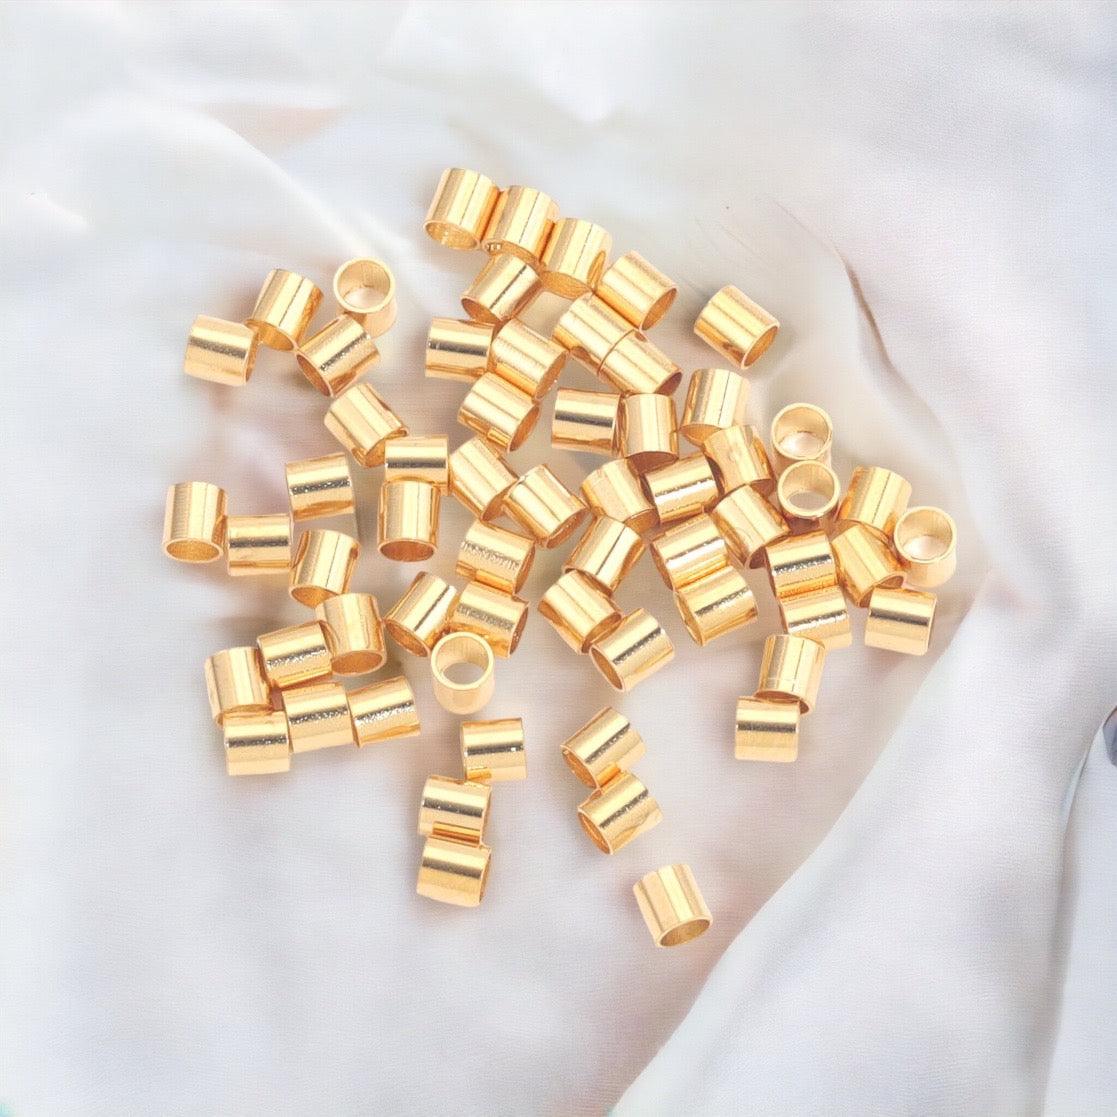 14K Gold Filled 2x2mm Crimp Tube (10 pieces)